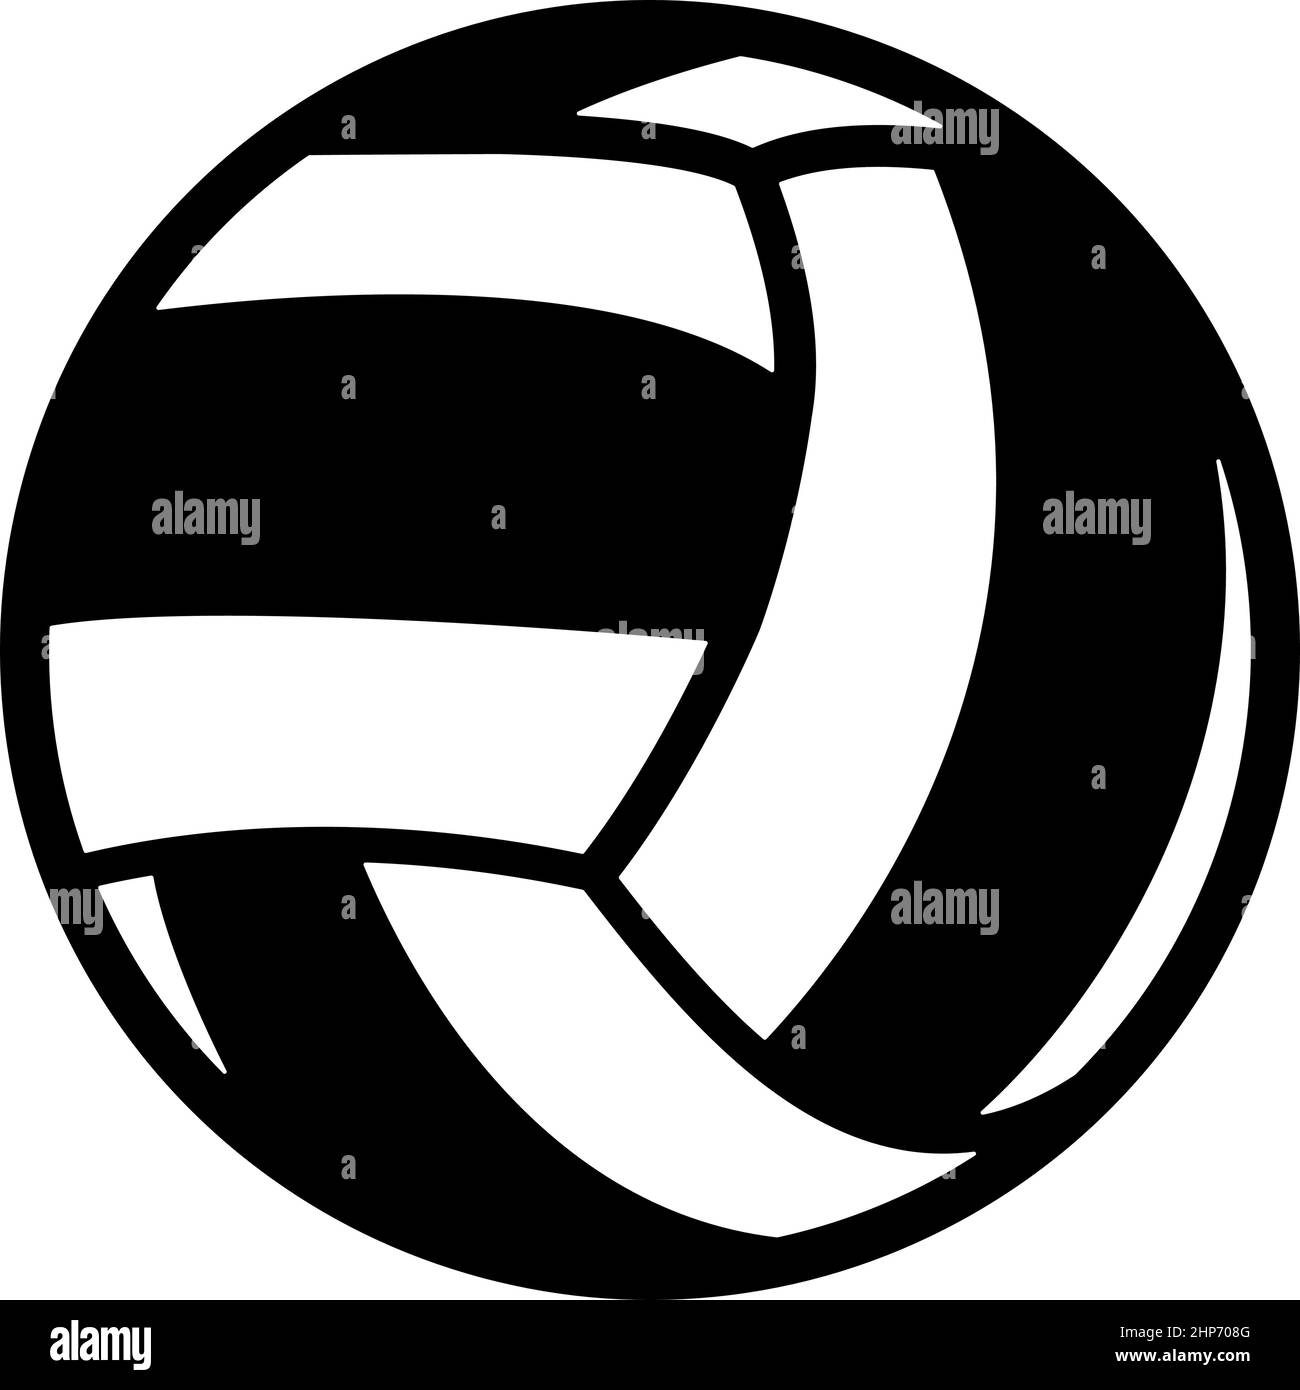 Volleyball Ball Sport Ausrüstung Symbol schwarz Farbe Vektor Illustration flachen Stil Bild Stock Vektor